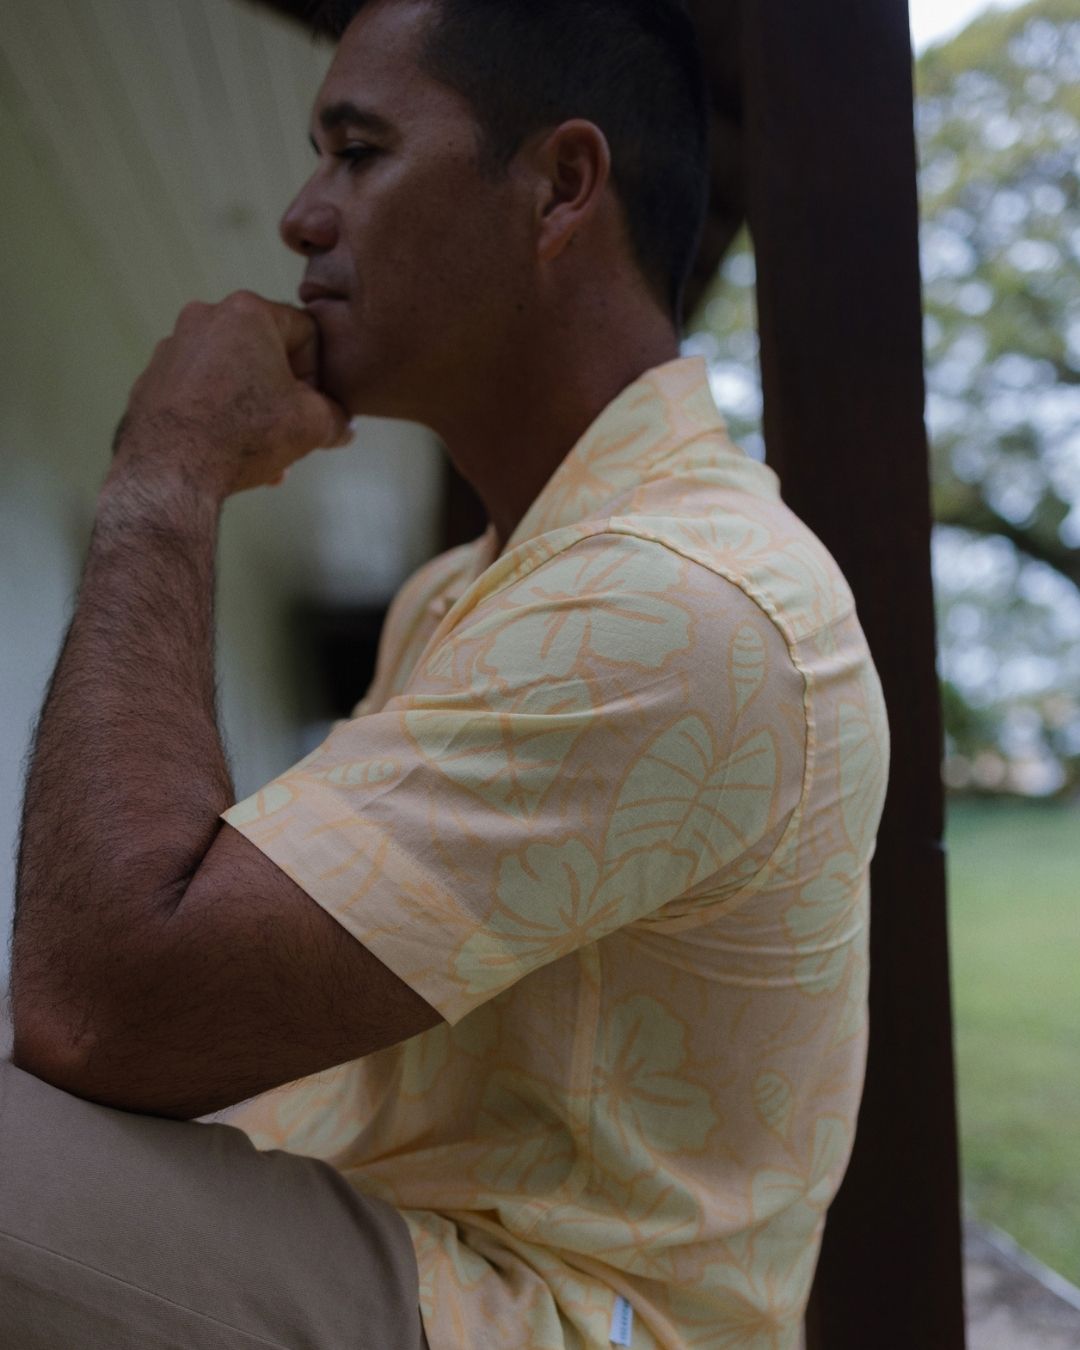 Kanoa Short Sleeve Mens Island Shirt - Royal Hibiscus Mango - Orange